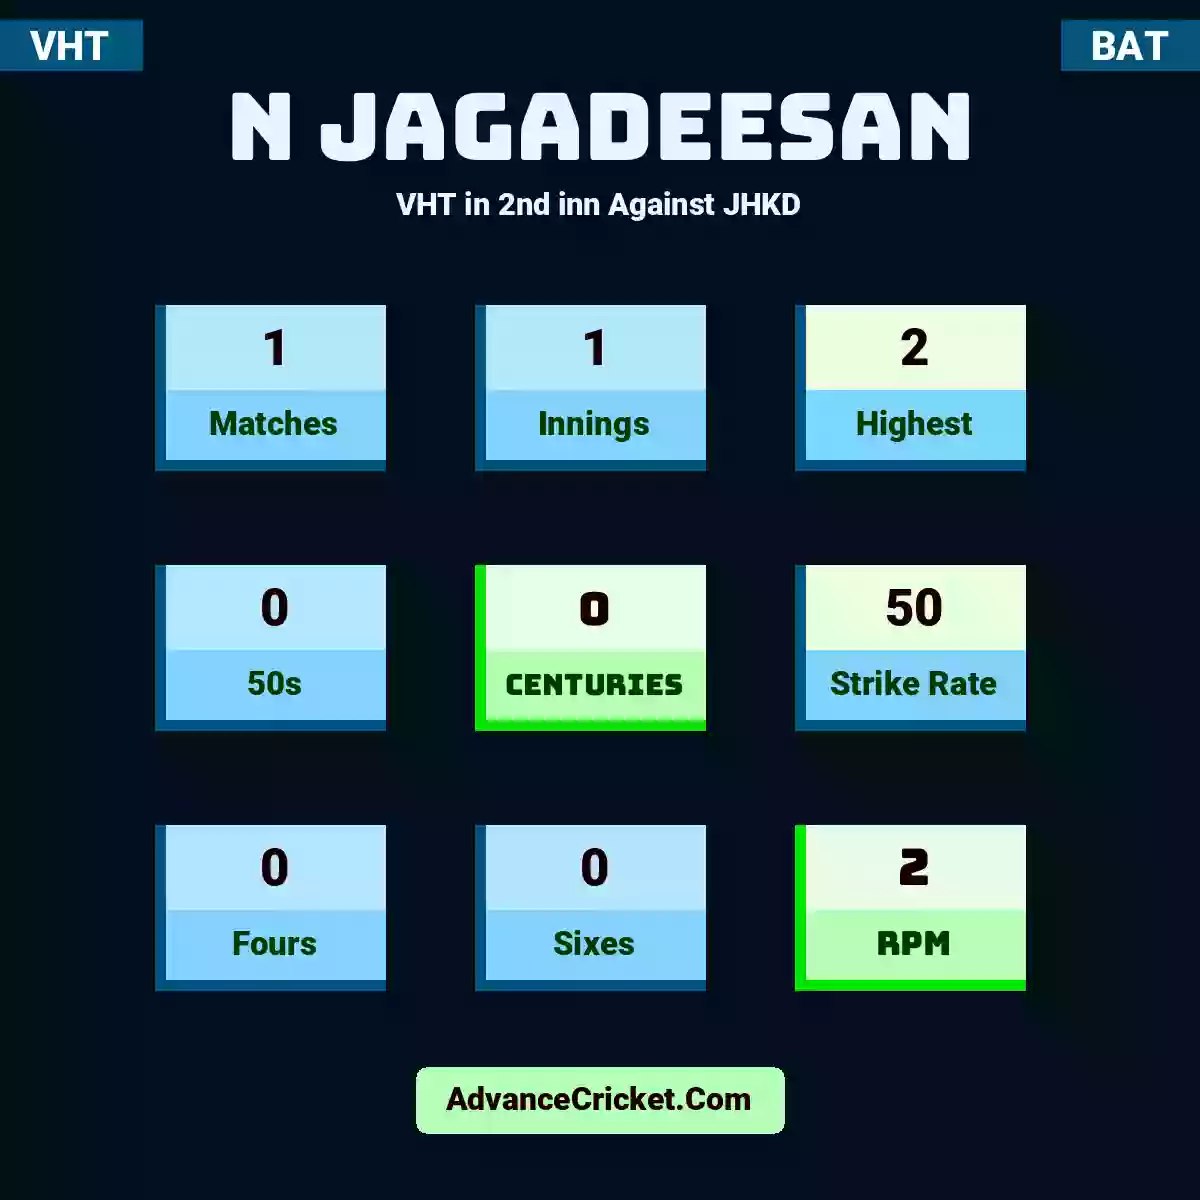 N Jagadeesan VHT  in 2nd inn Against JHKD, N Jagadeesan played 1 matches, scored 2 runs as highest, 0 half-centuries, and 0 centuries, with a strike rate of 50. N.Jagadeesan hit 0 fours and 0 sixes, with an RPM of 2.